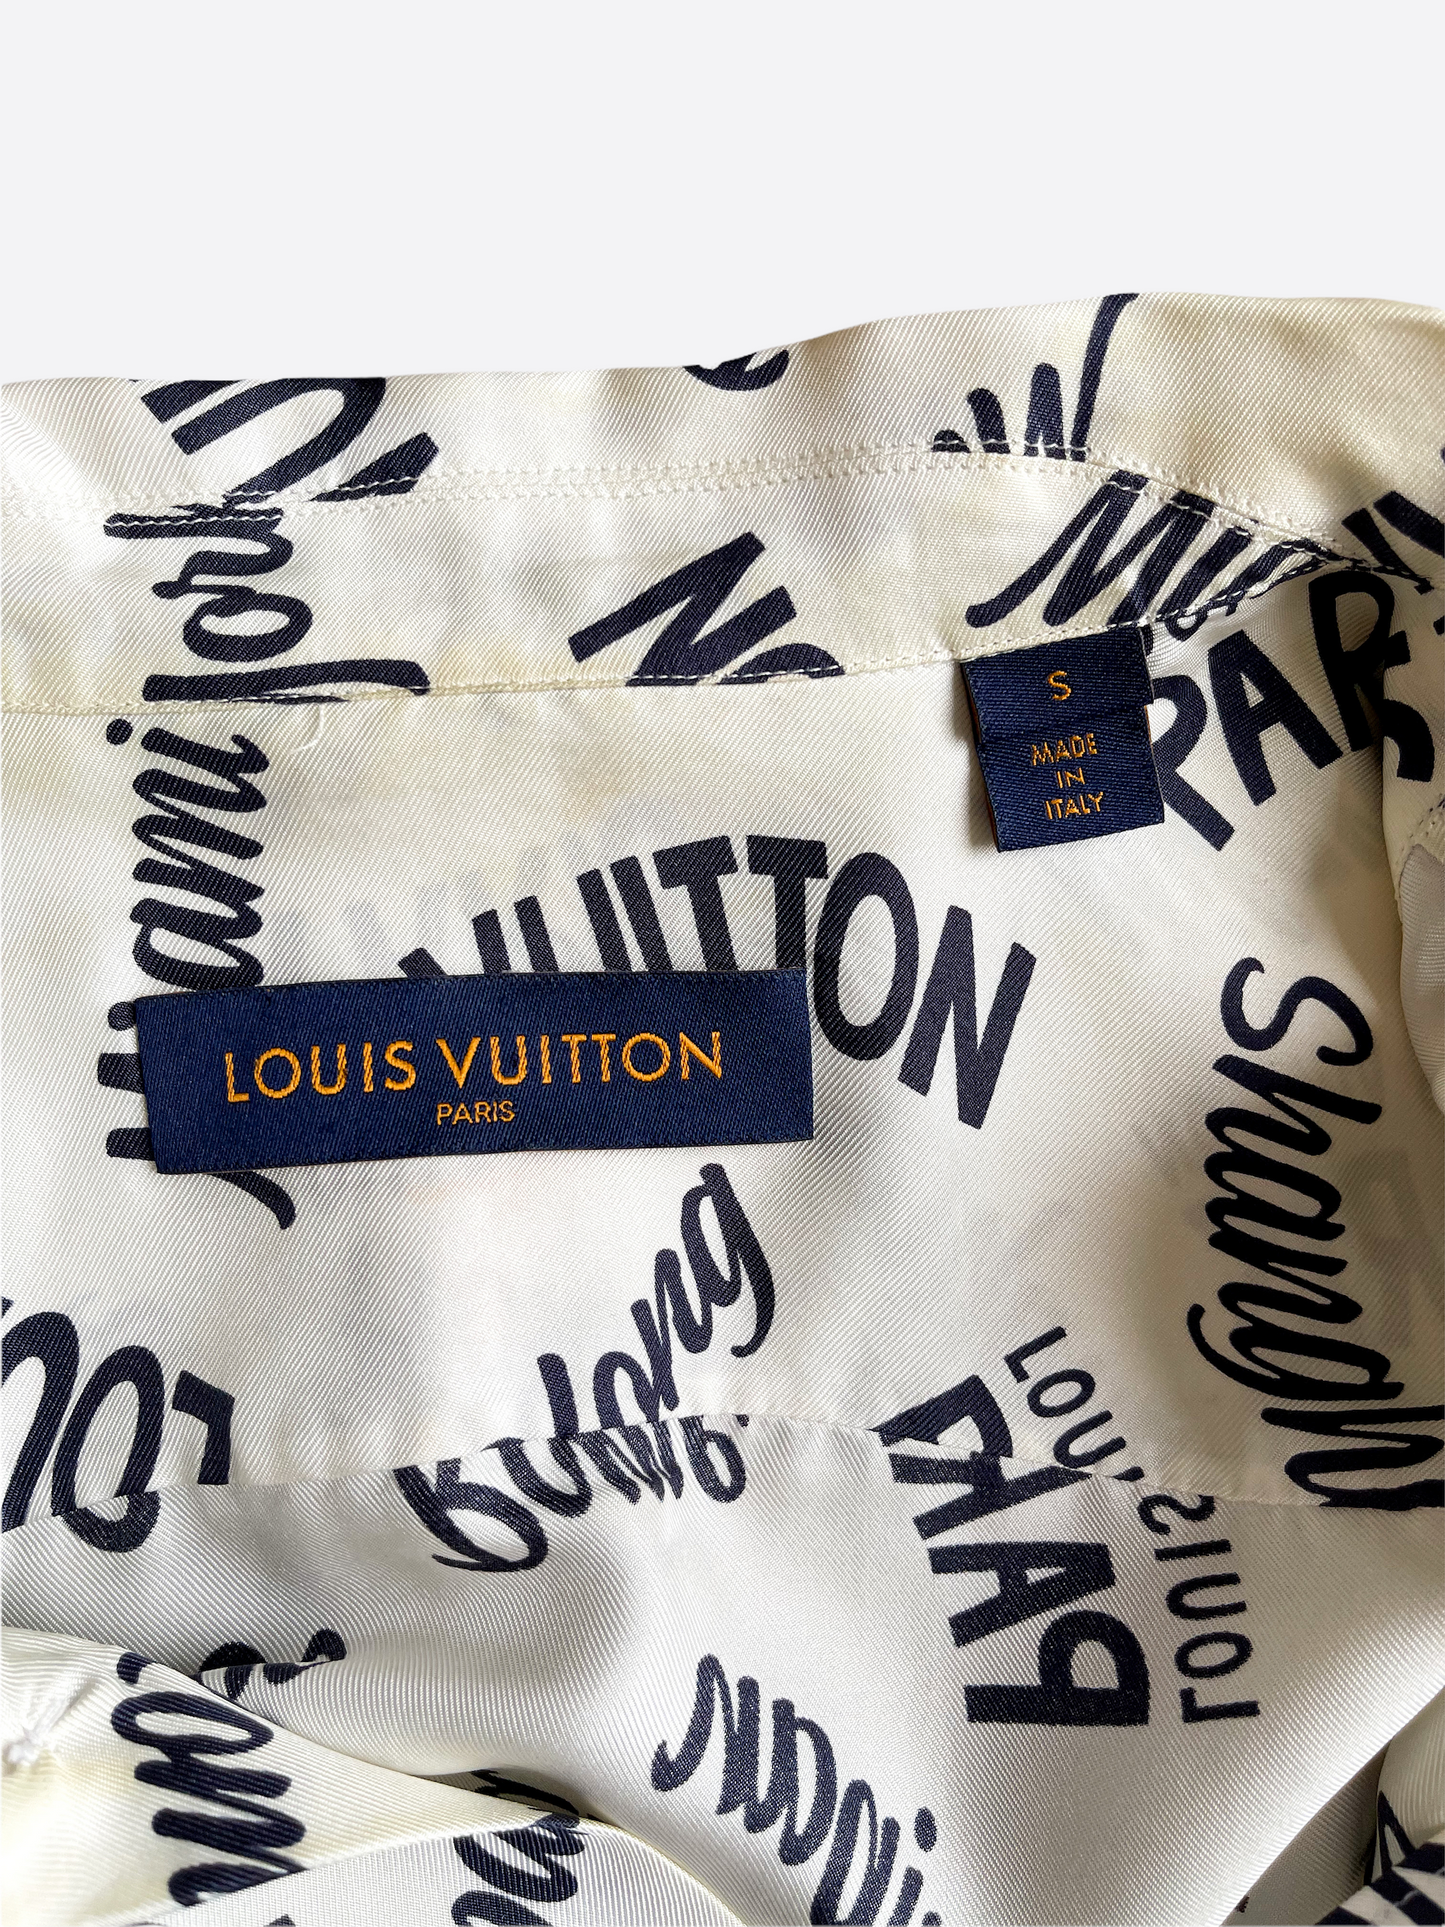 Quality Designer shirts Sizes: M-XXL Price: 9,000 Call/WhatsApp:  +2348185153351 #louisvuitton #thebaddestshoeplug #designers